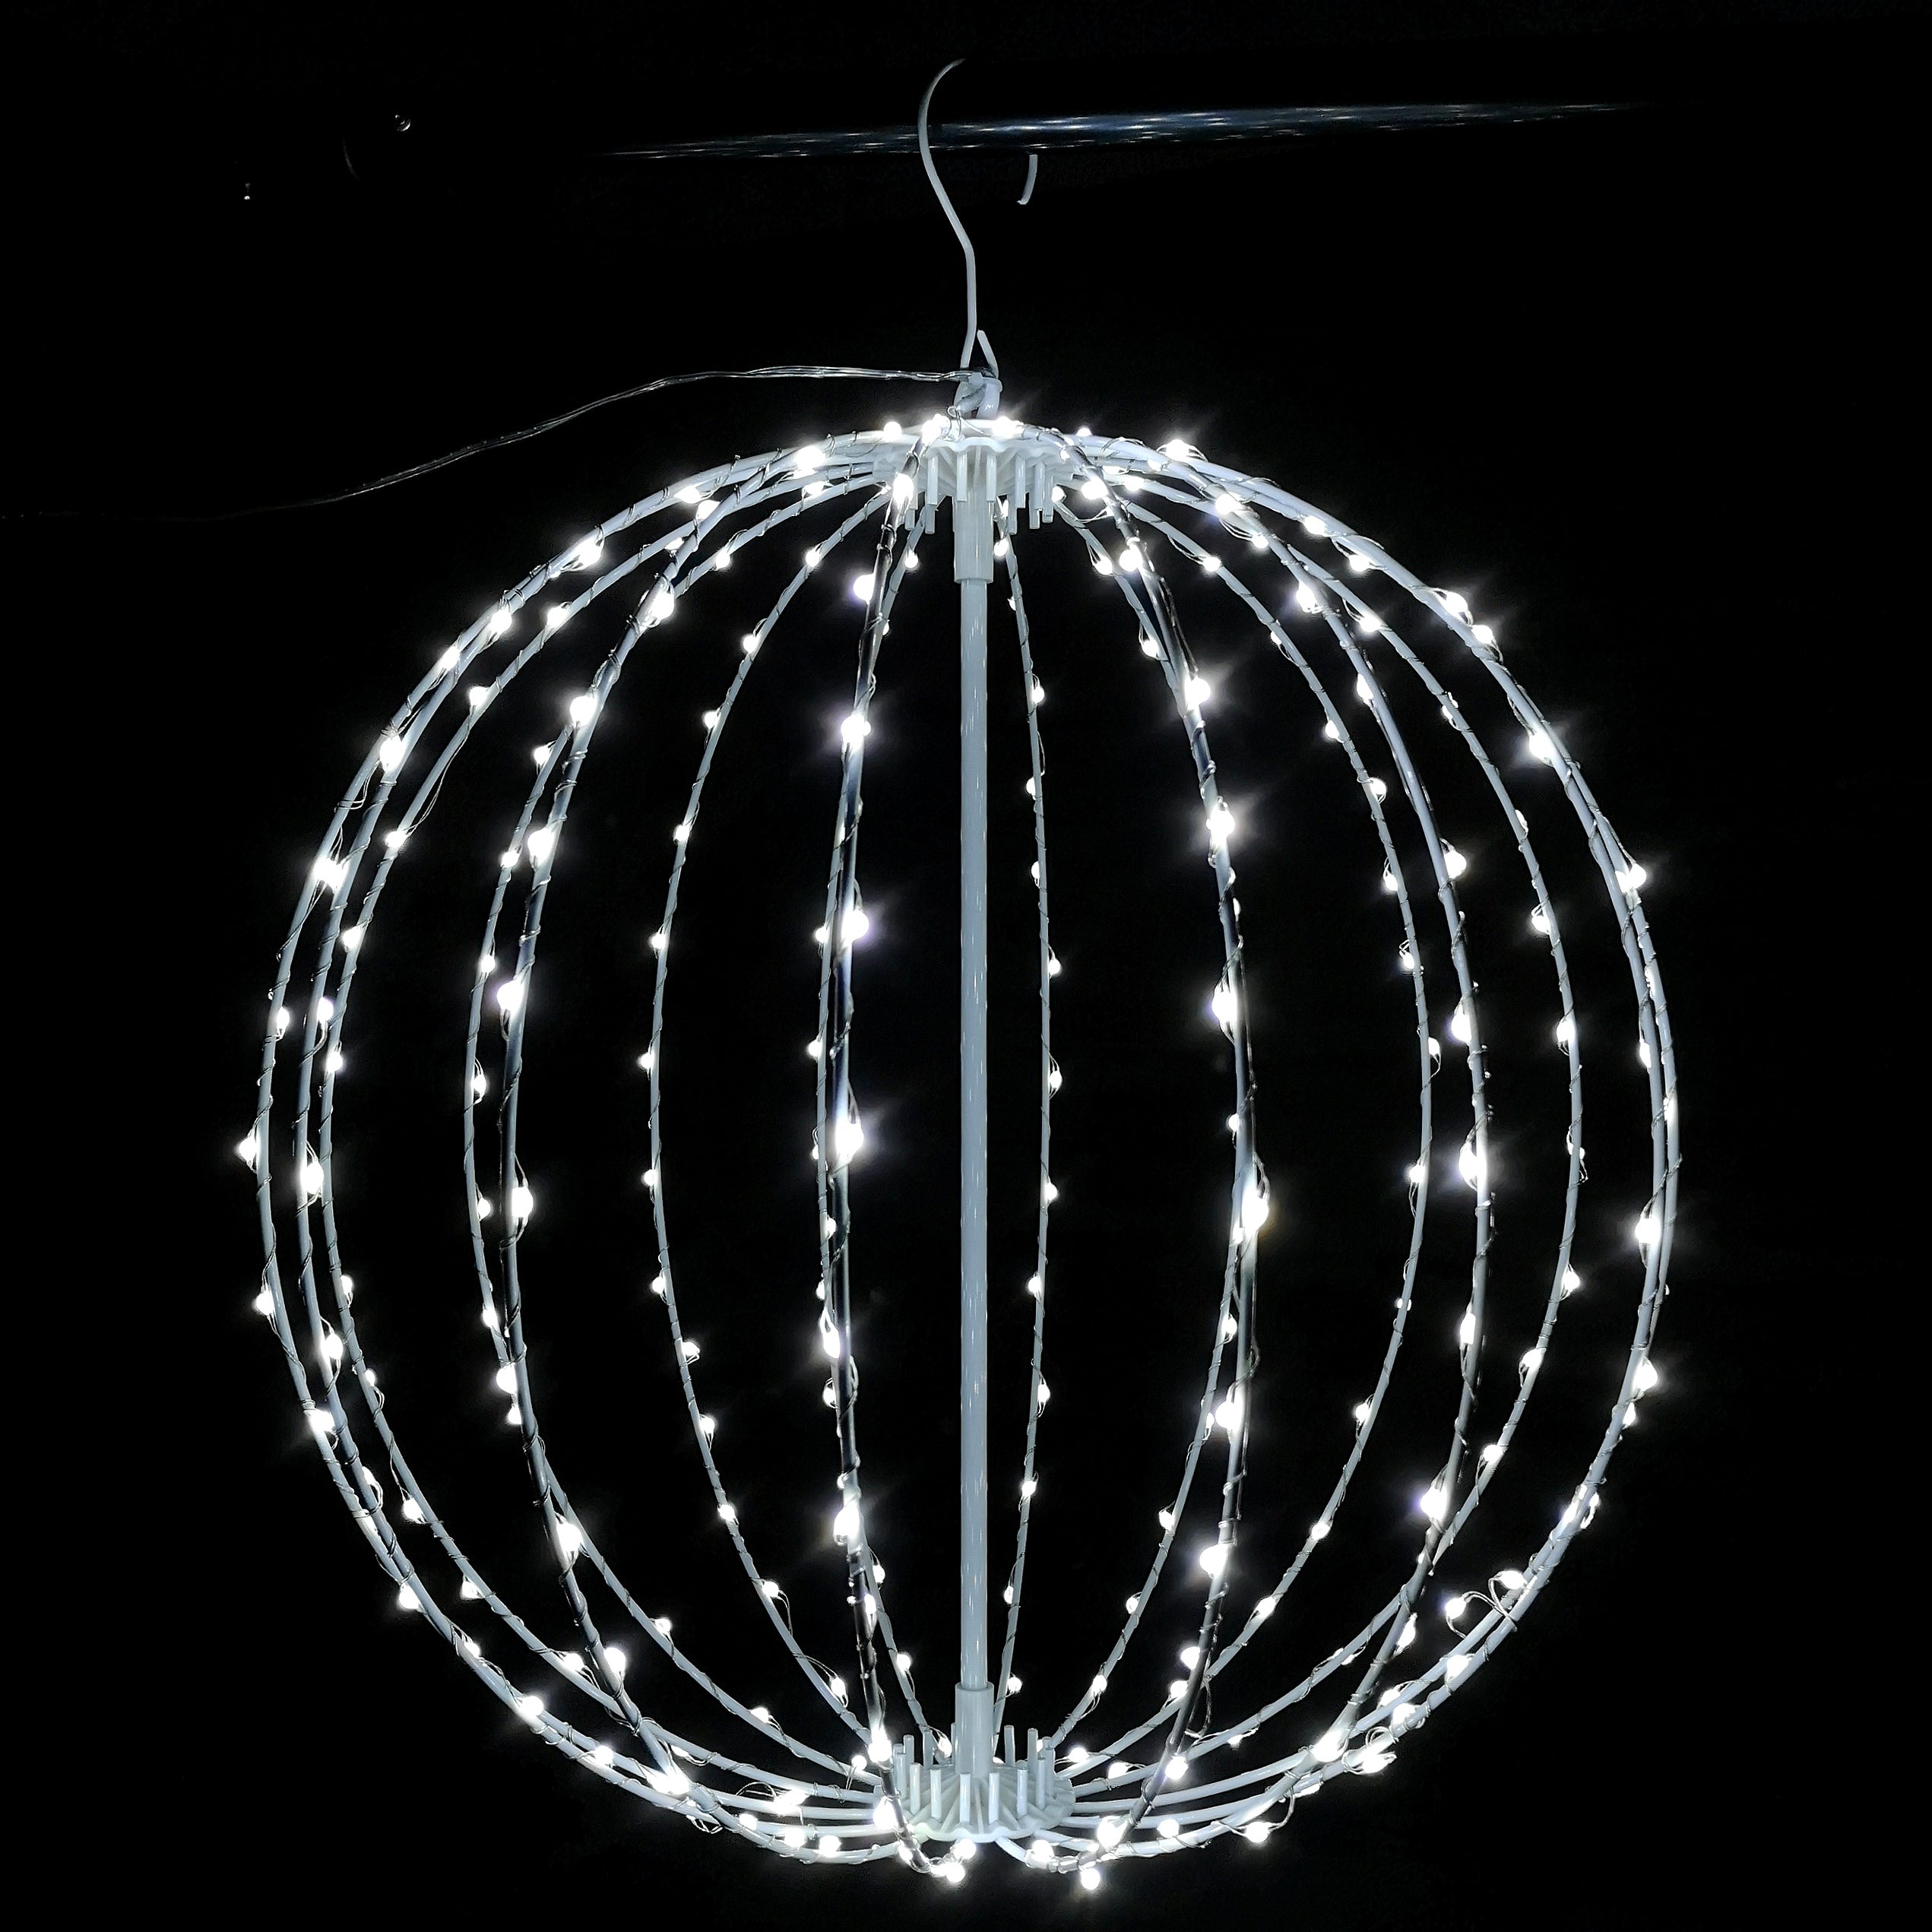 40cm Light up White Metal Frame Hanging Christmas Ball with 240 Cool White LEDs